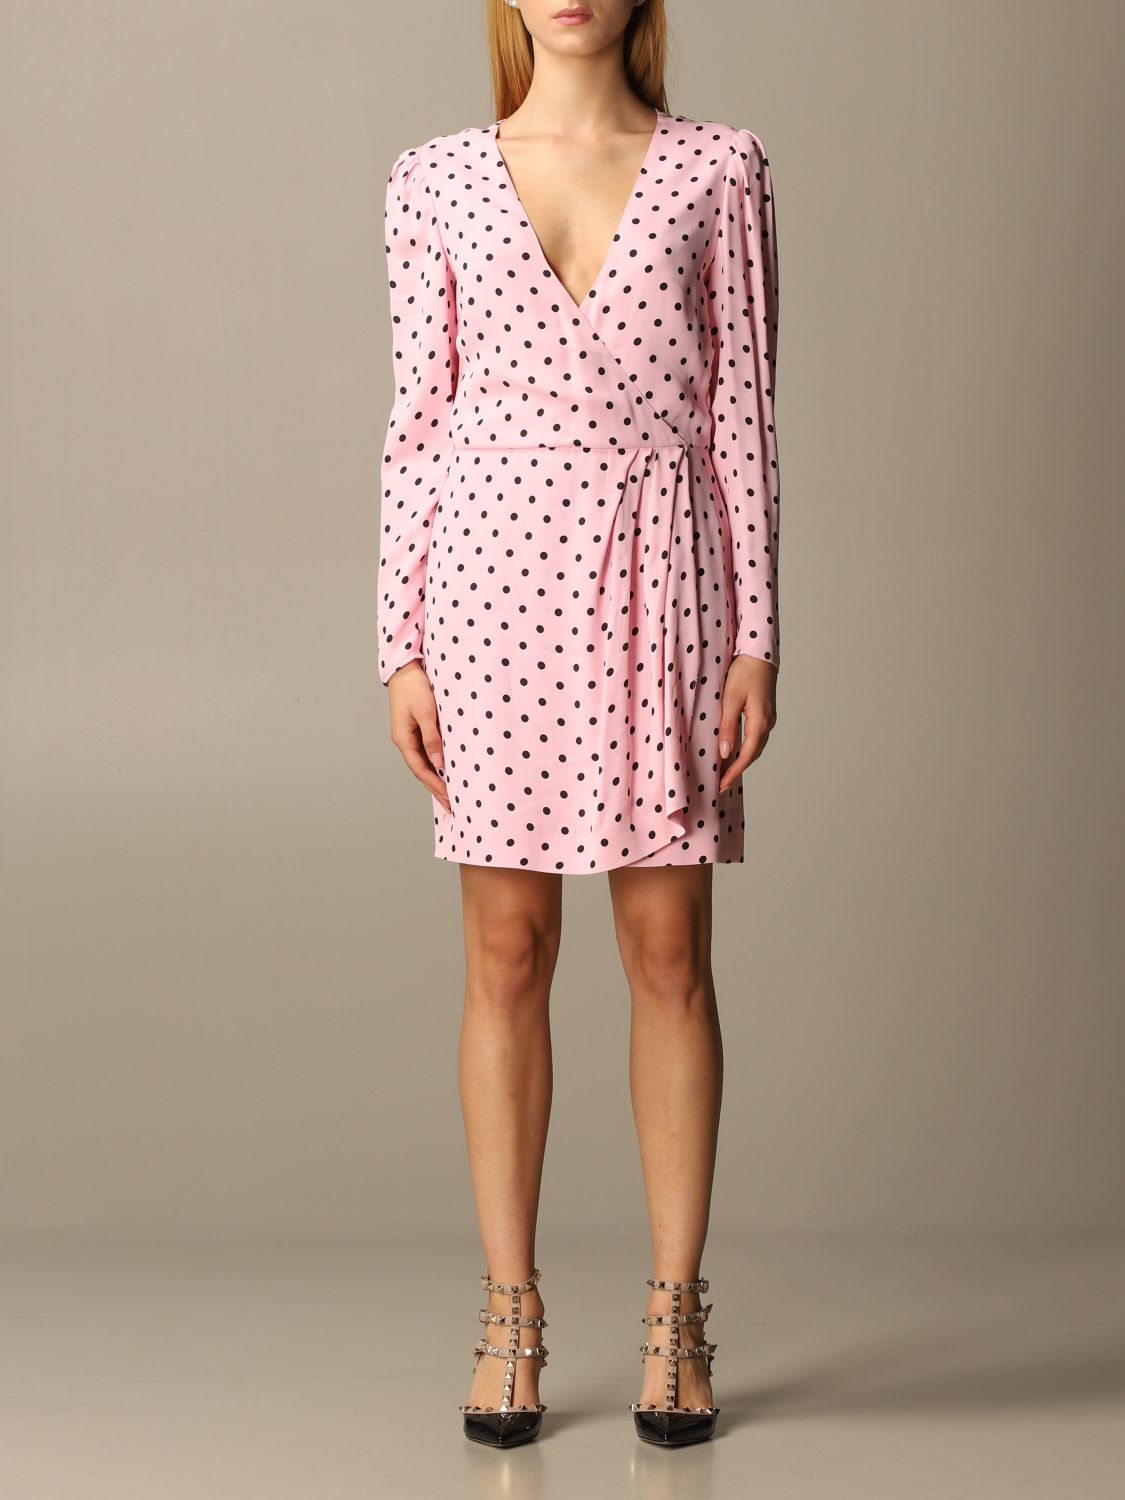 indsats deres rødme Red Valentino Outlet: short dress with polka dots | Dress Red Valentino  Women Pink | Dress Red Valentino UR0VAV75 5DU GIGLIO.COM